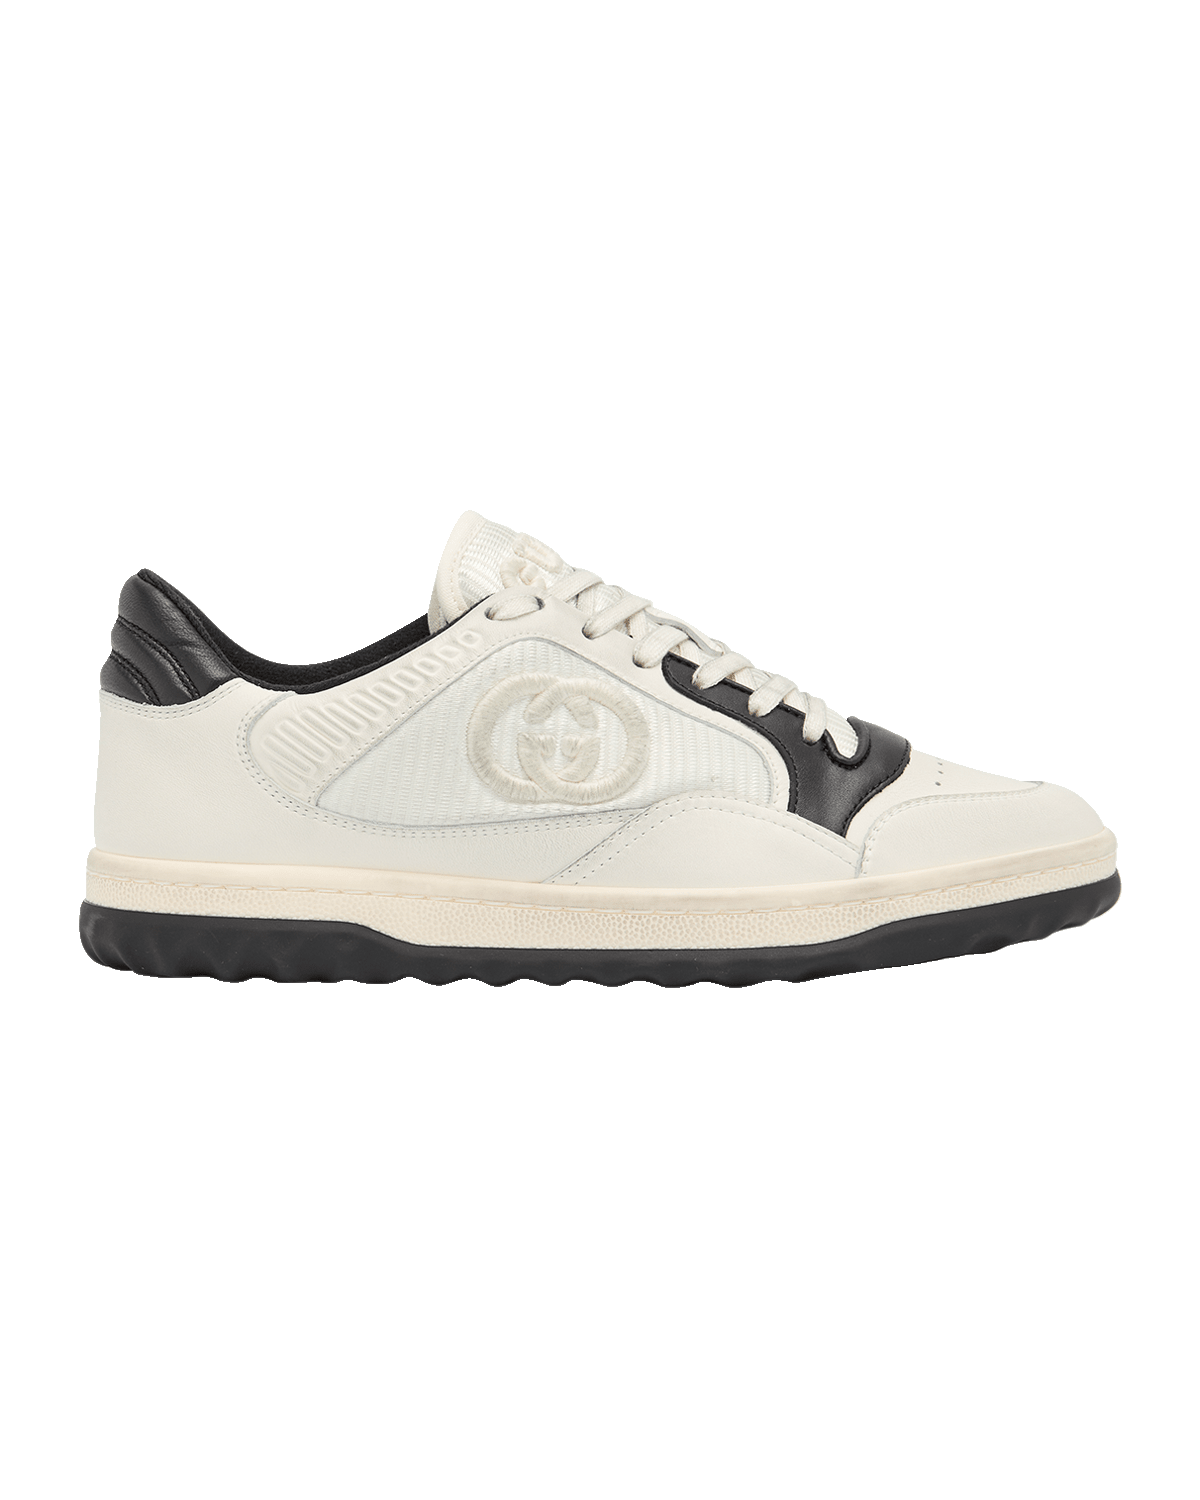 Gucci Premium Run Suede Sneakers | Neiman Marcus